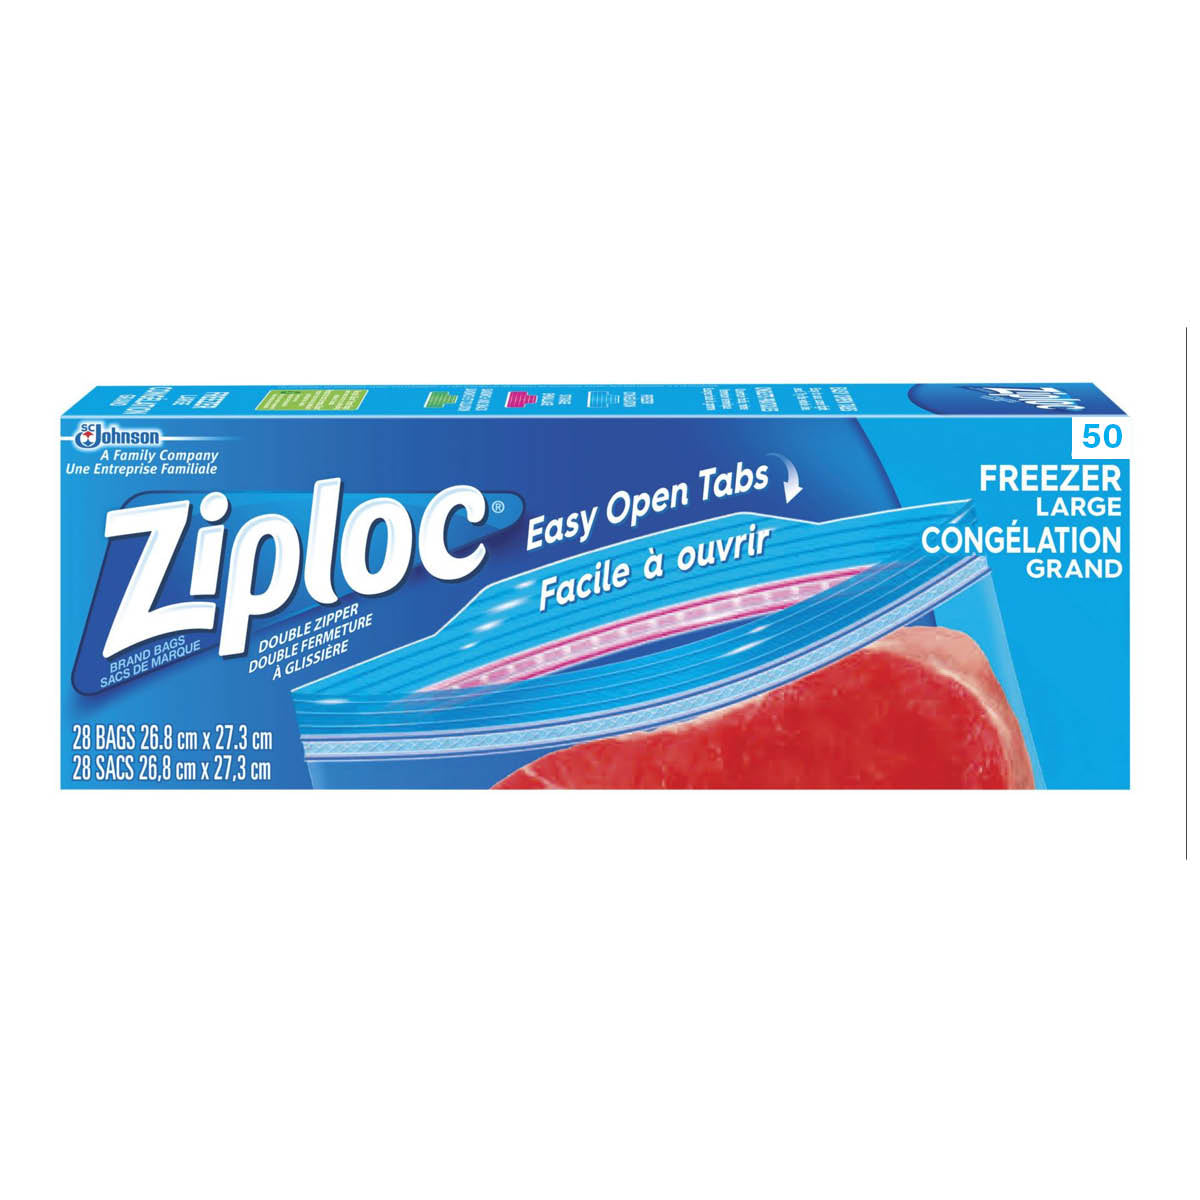 Ziploc Brand Large Freezer Bags, 50 pack